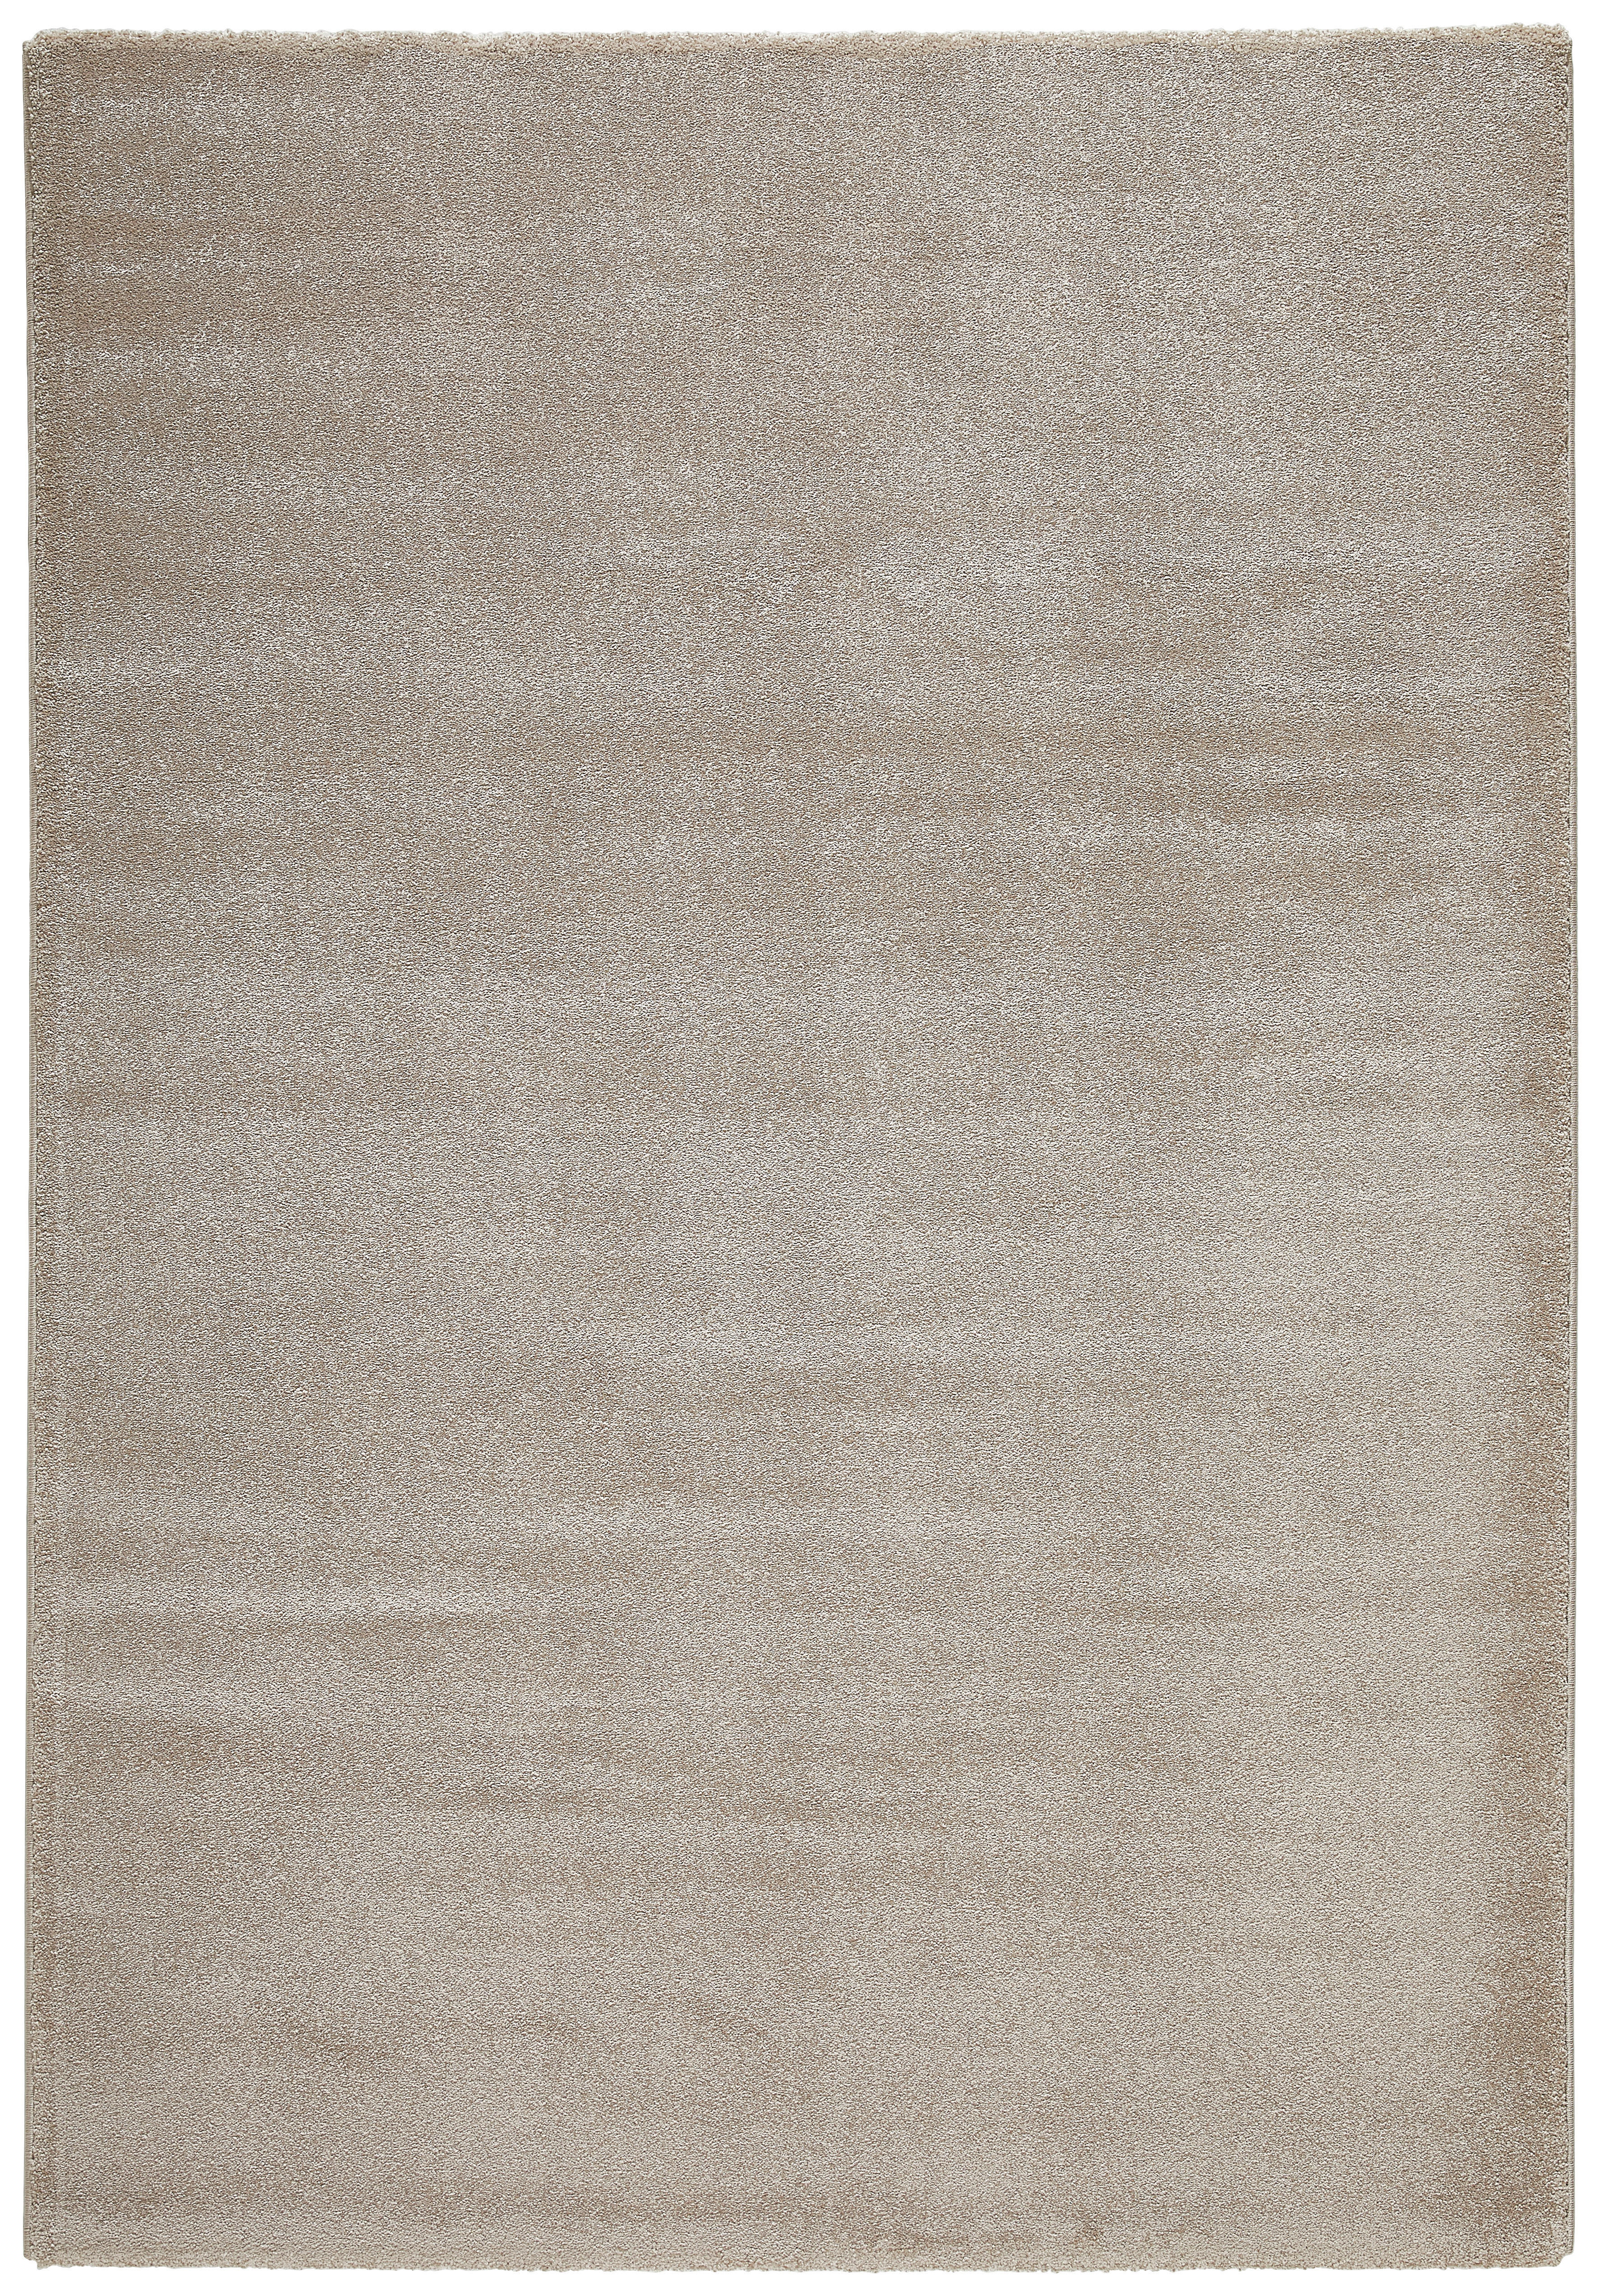 WEBTEPPICH 200/290 cm Tonga  - Beige, KONVENTIONELL, Naturmaterialien/Textil (200/290cm) - Novel